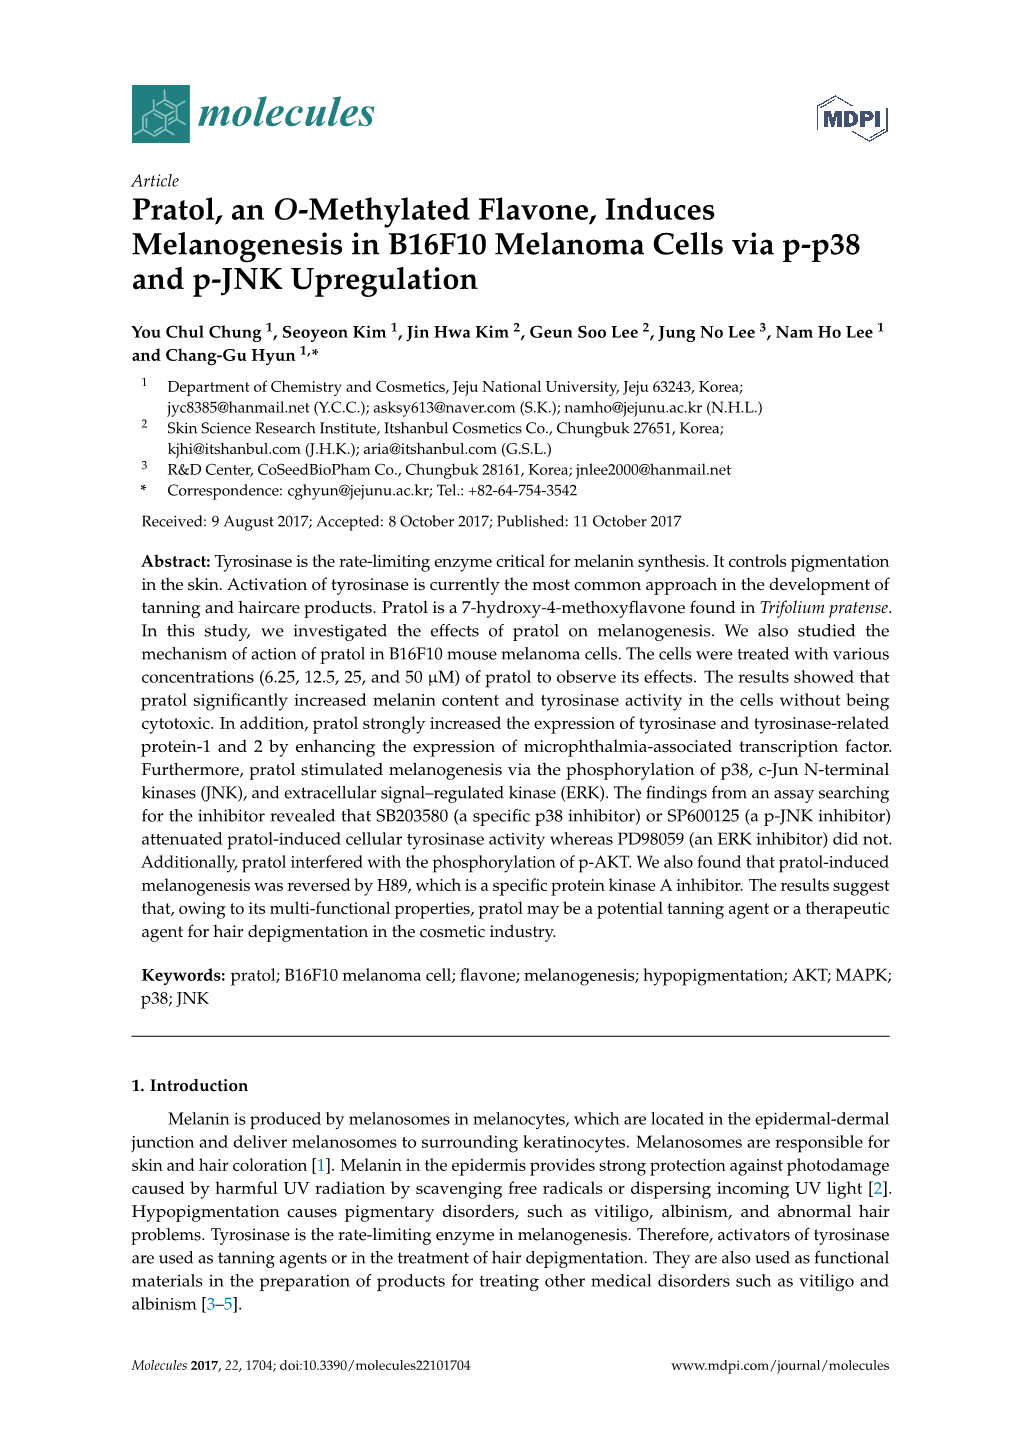 Pratol, an O-Methylated Flavone, Induces Melanogenesis in B16F10 Melanoma Cells Via P-P38 and P-JNK Upregulation